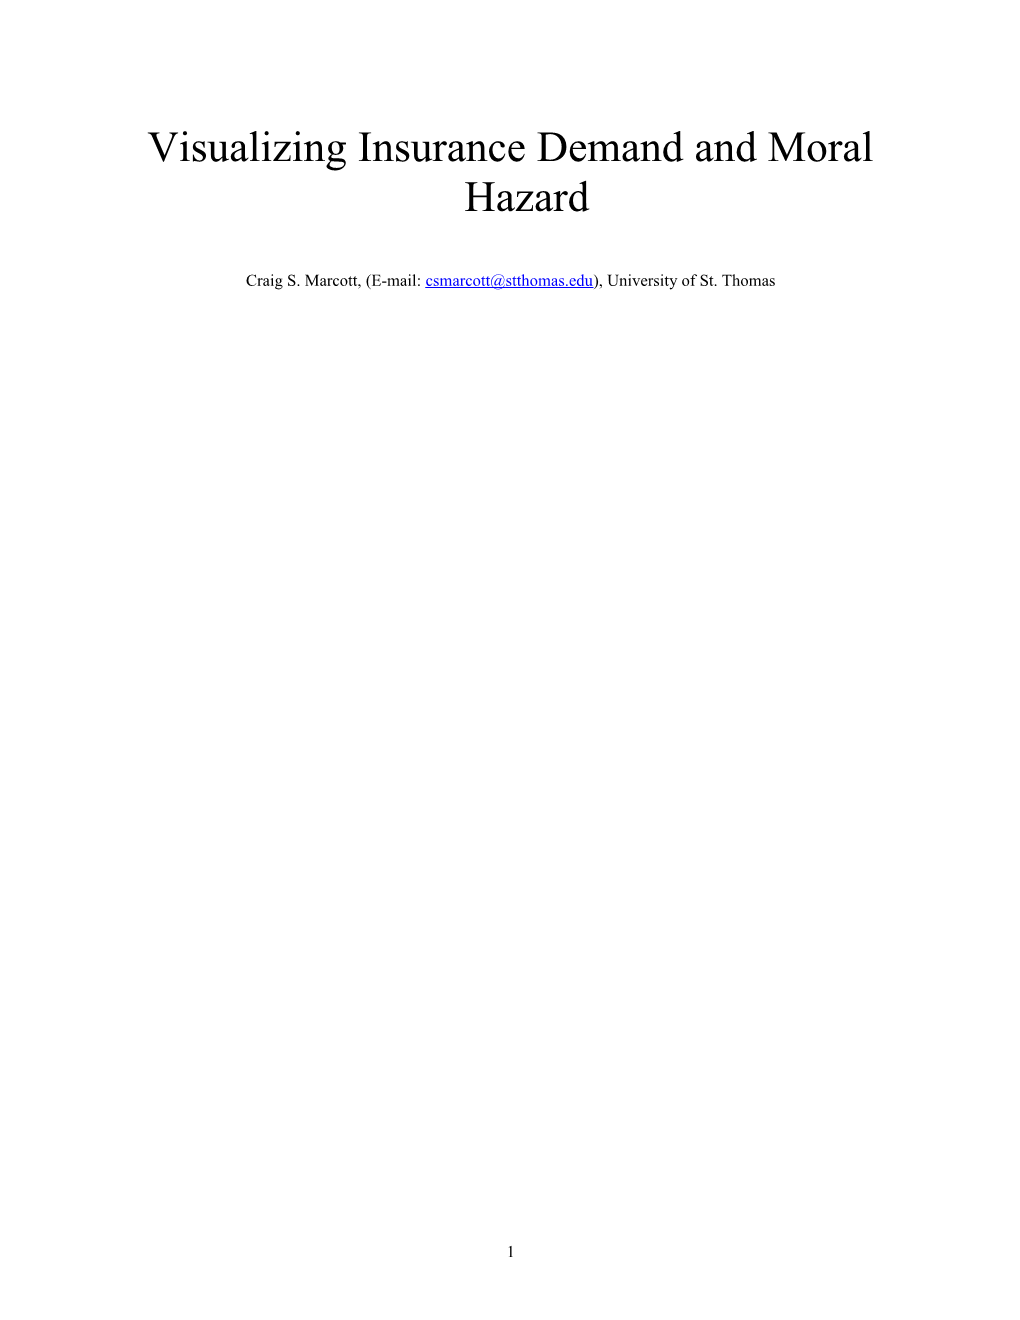 Visualizing Insurance Demand and Moral Hazard